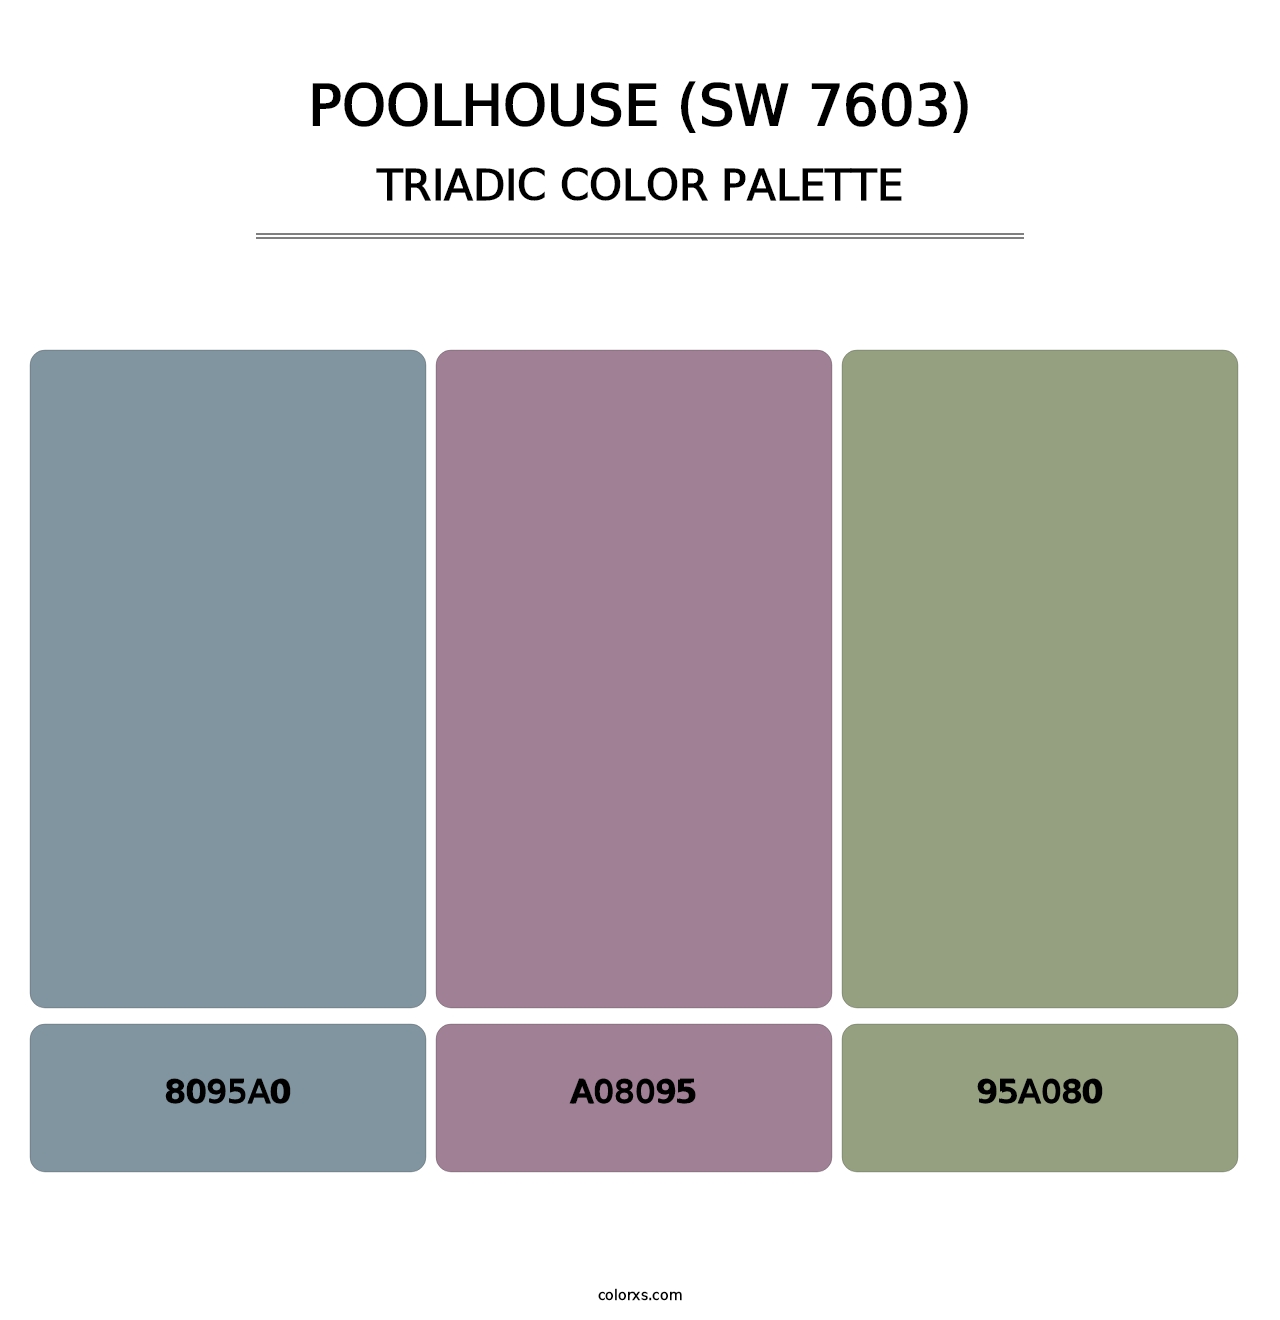 Poolhouse (SW 7603) - Triadic Color Palette